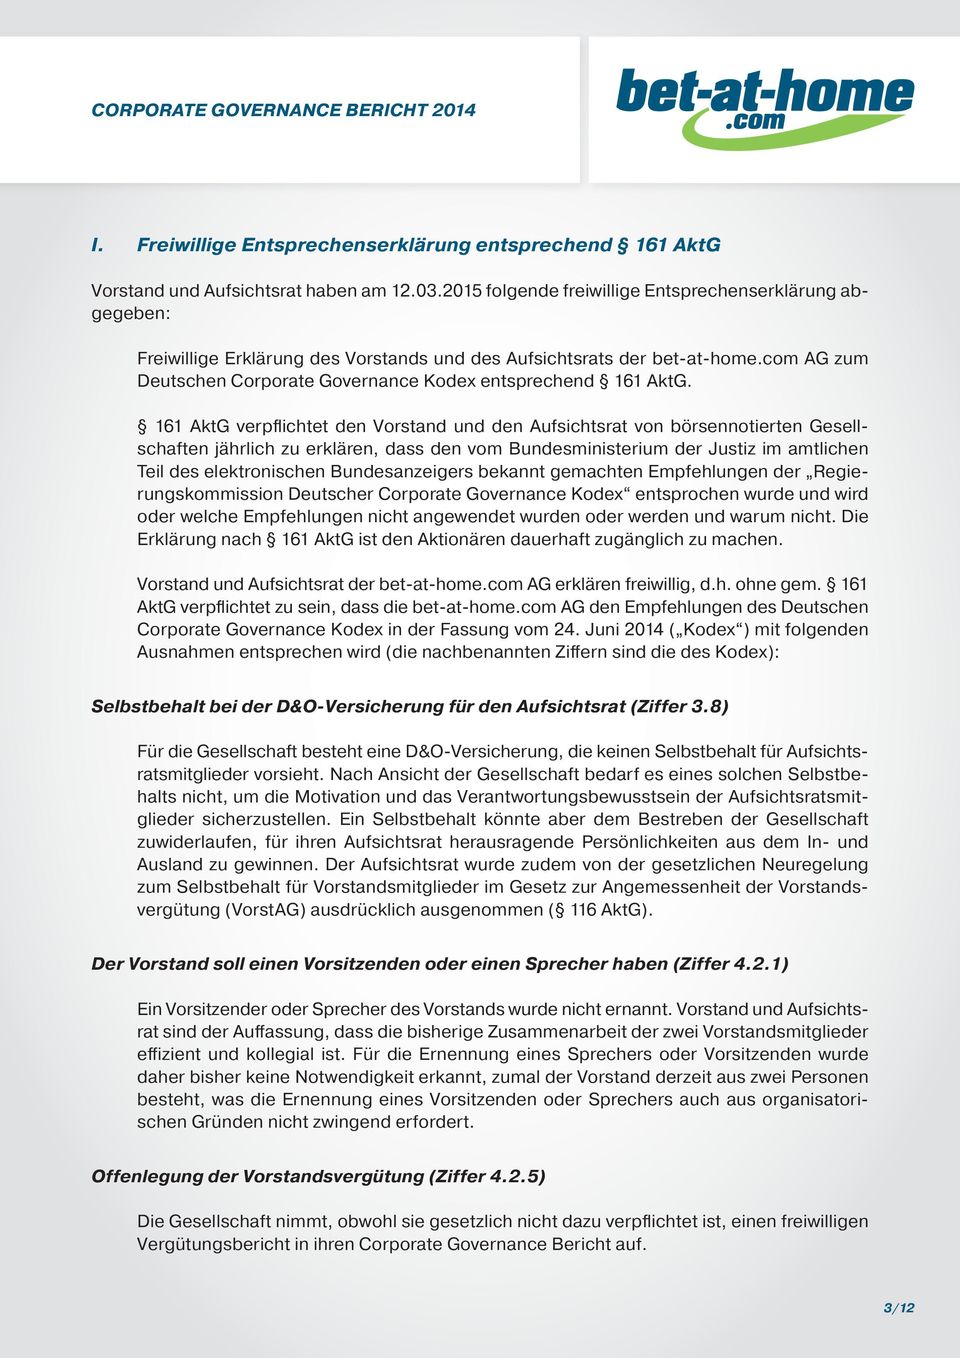 com AG zum Deutschen Corporate Governance Kodex entsprechend 161 AktG.